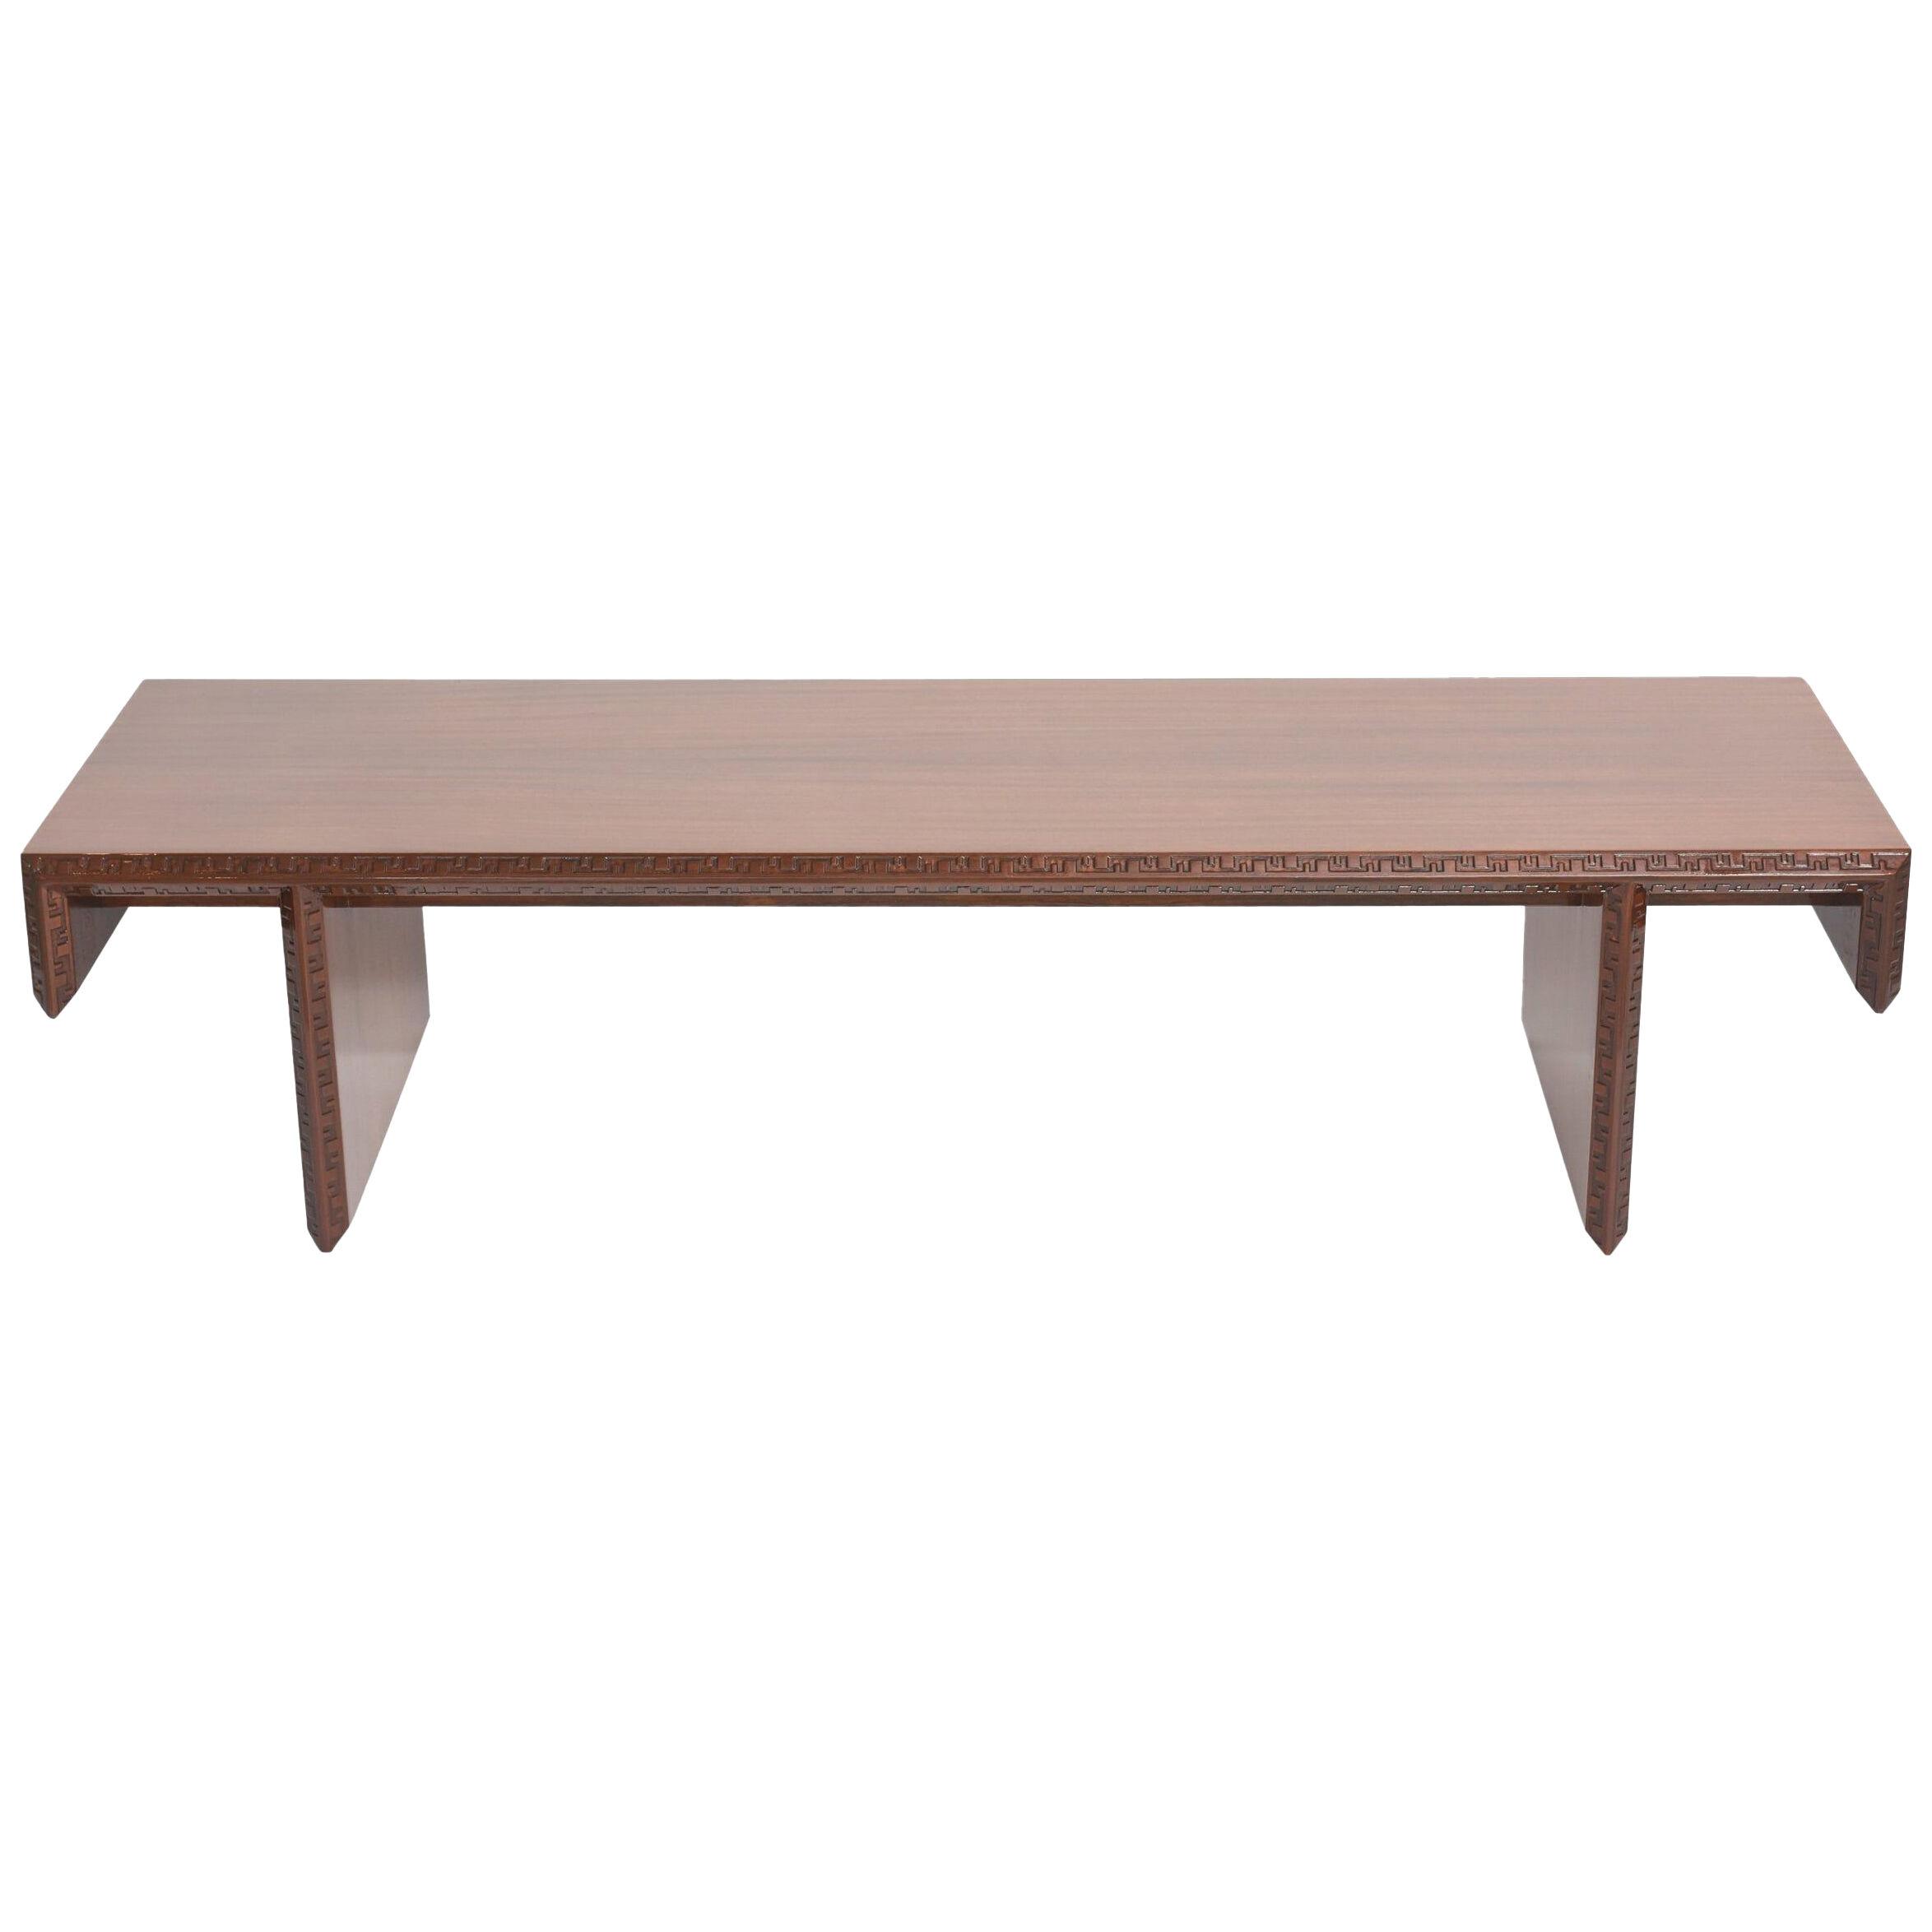 American Modern Mahogany "Taliesin Group" Low Table or Bench, Frank Lloyd Wright